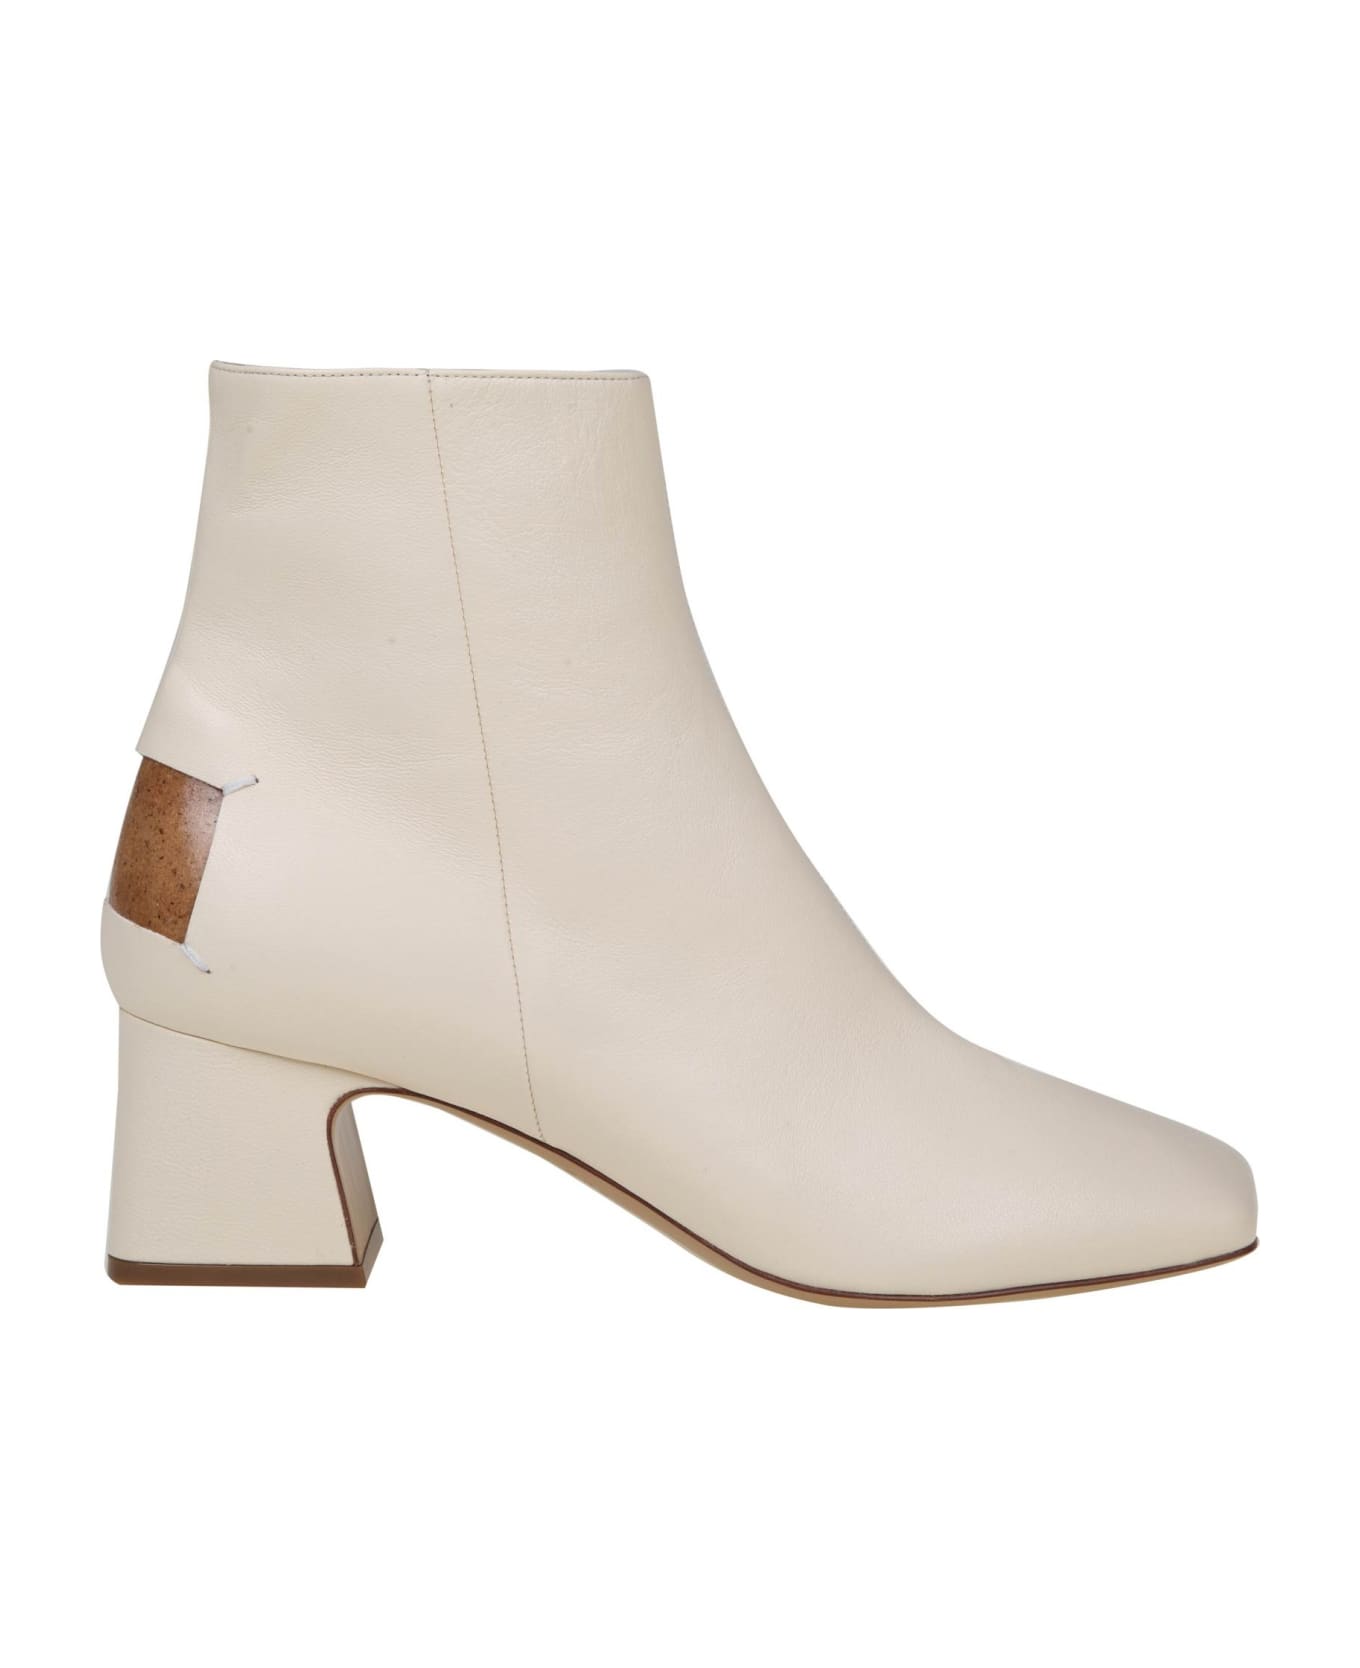 Maison Margiela Side Zip Block Heel Ankle Boots - Cream ブーツ